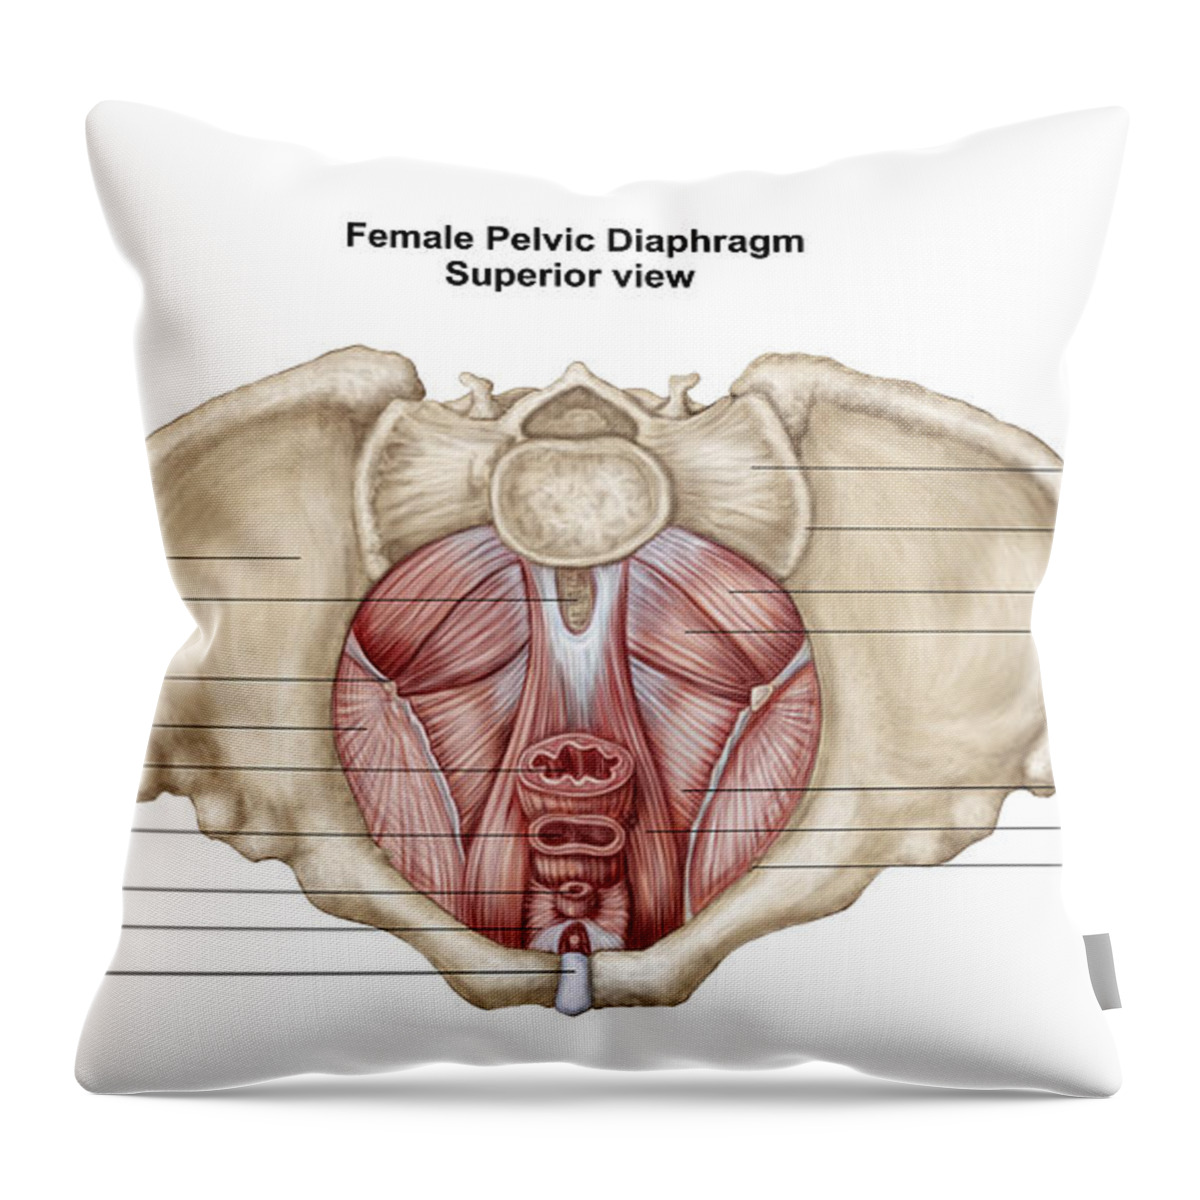 Pelvic Diaphram Of Human Female #1 Throw Pillow by Stocktrek